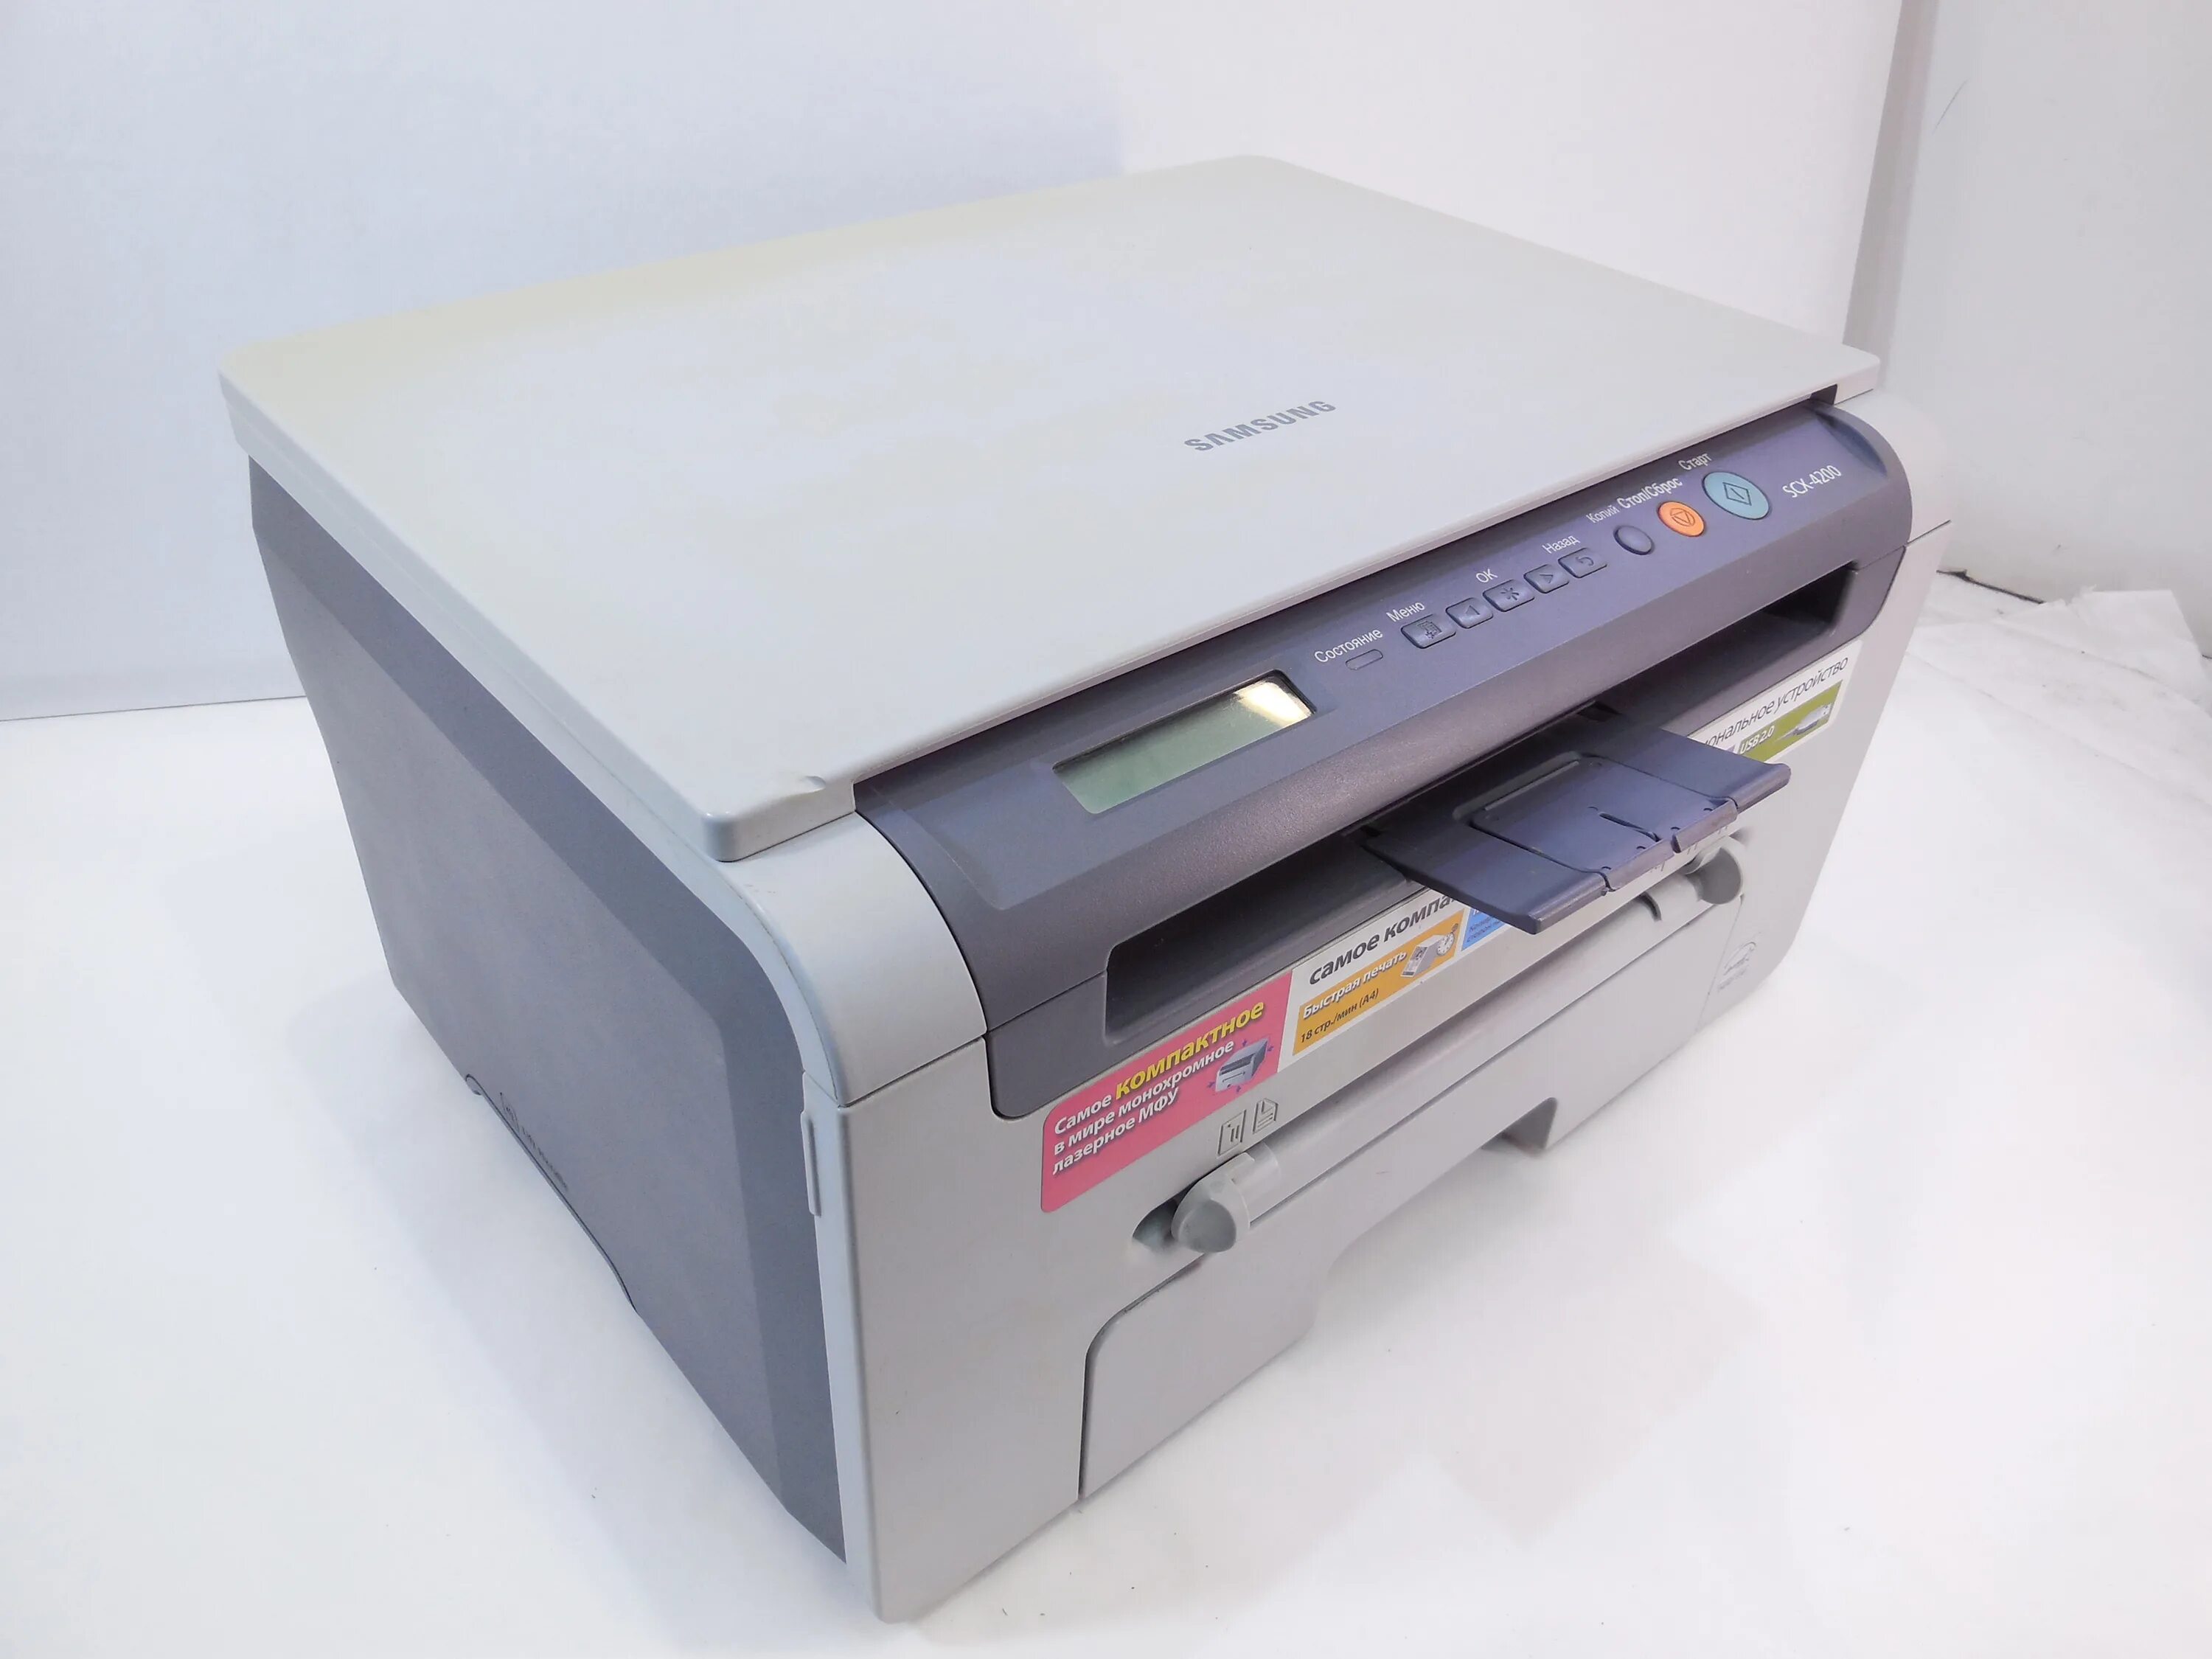 МФУ Samsung SCX-4200. Лазерный принтер самсунг 4200. Принтер сканер копир Samsung SCX 4200. Самсунг принтер МФУ 4200.